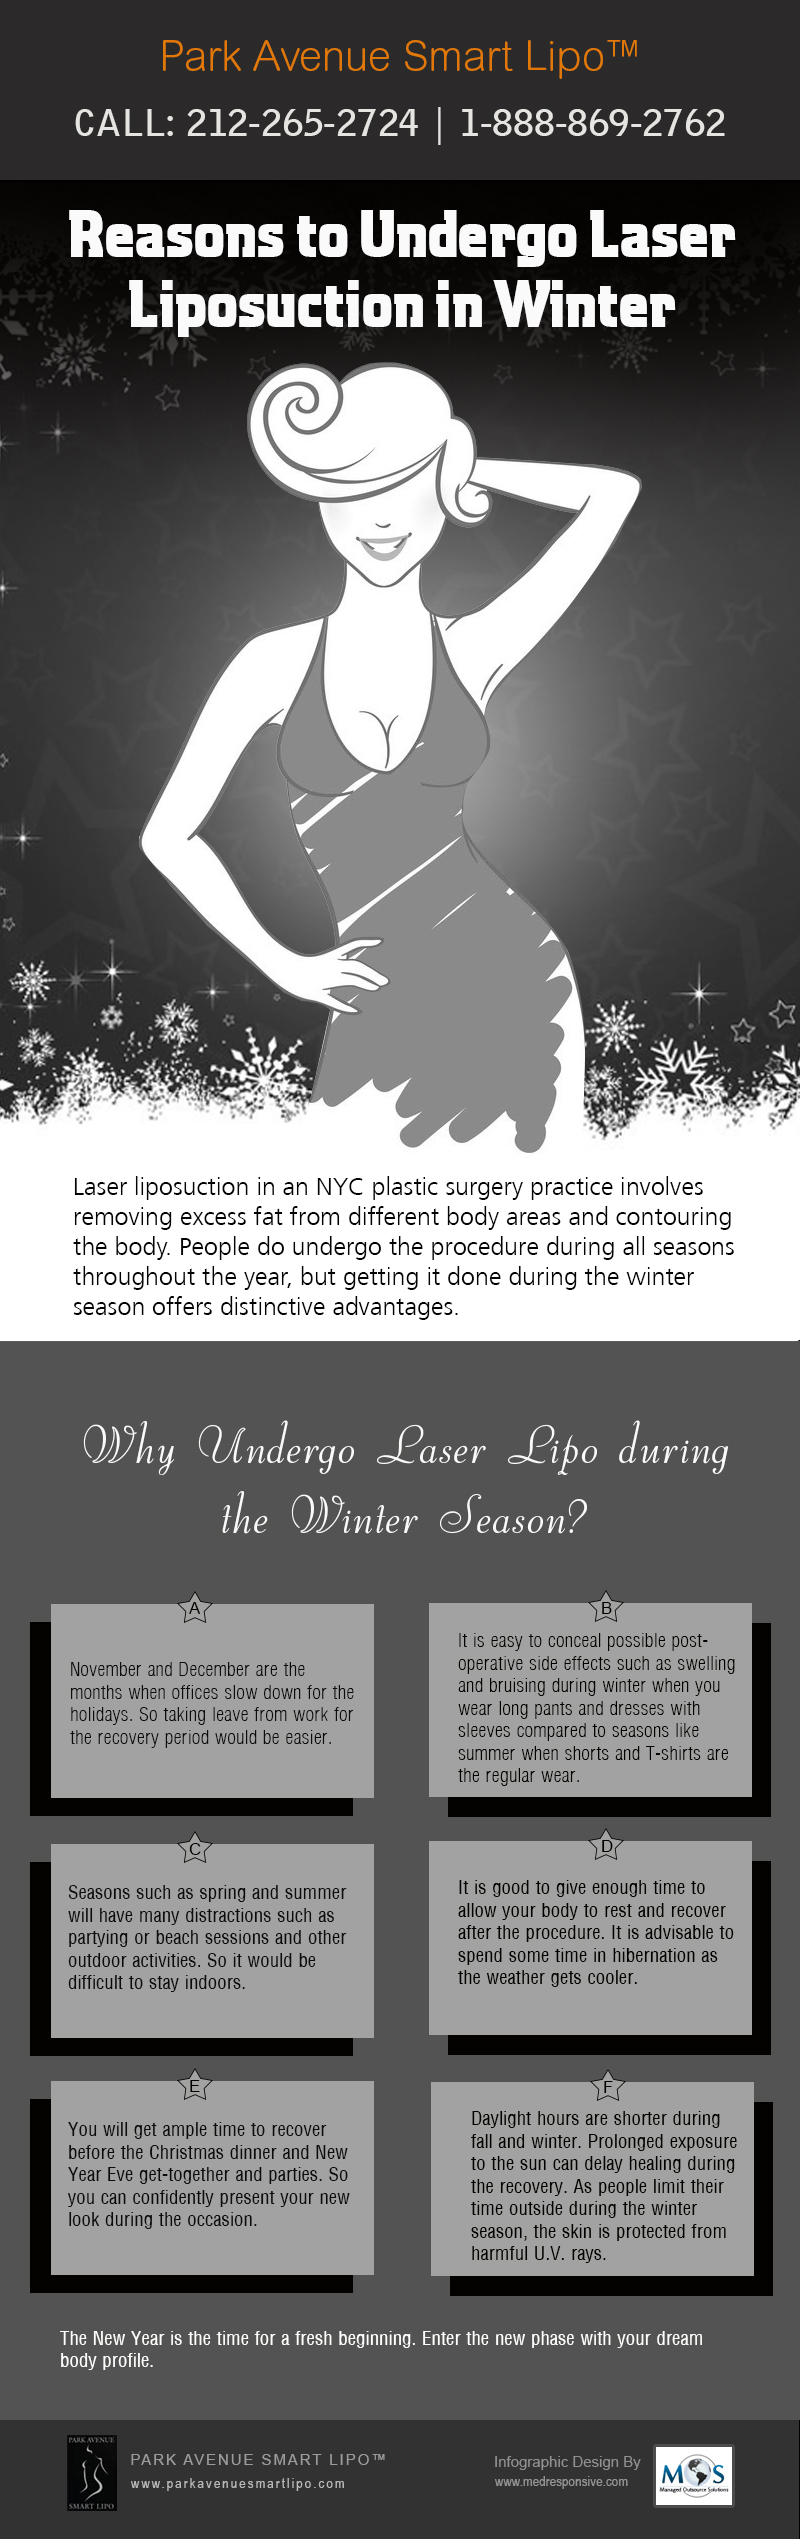 Reasons to Undergo Laser Liposuction in Winter